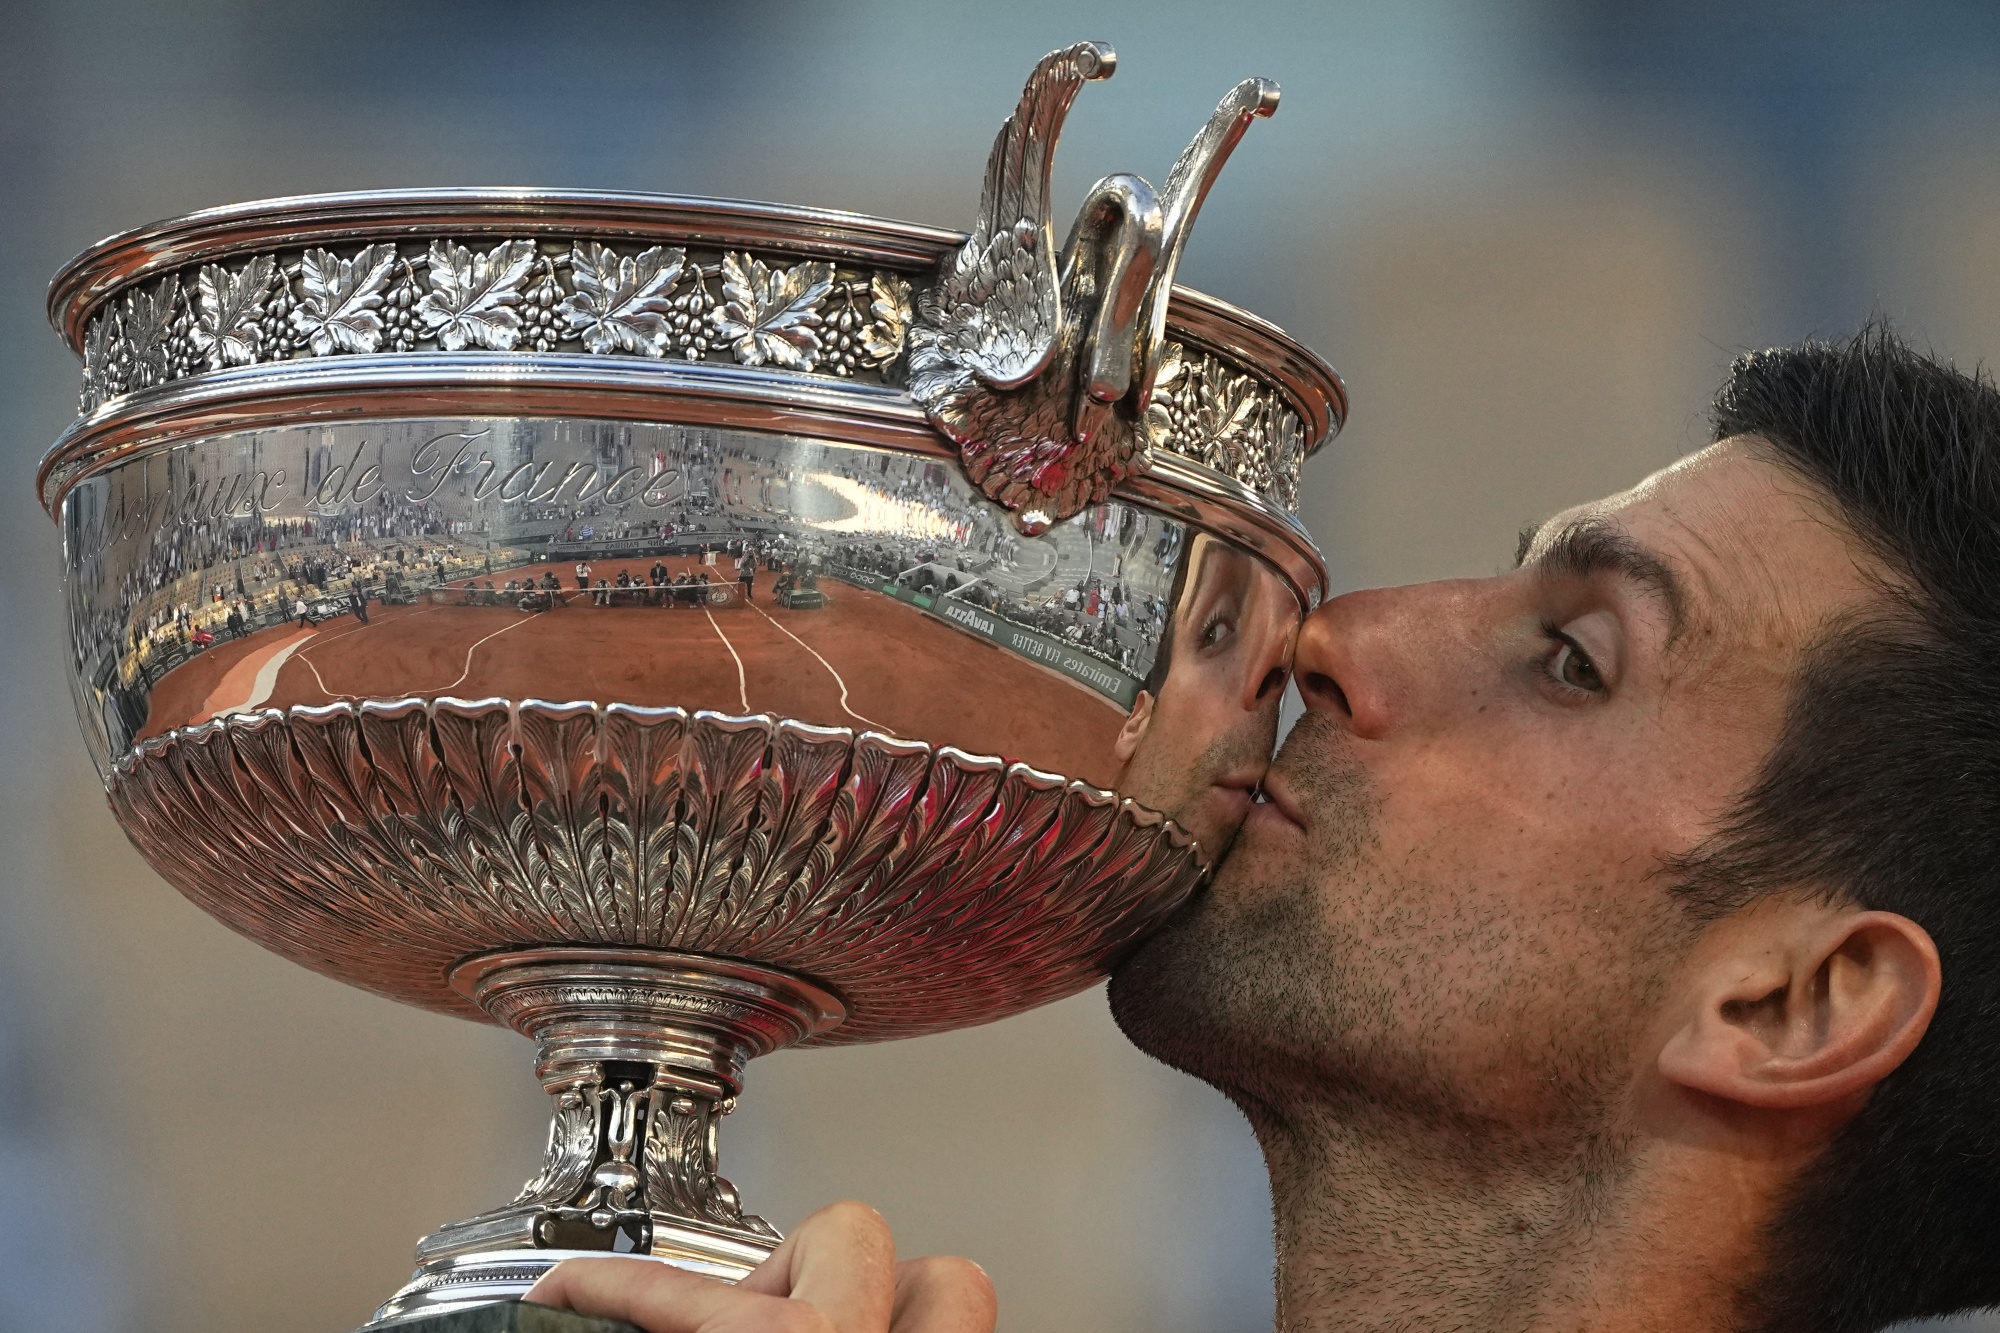 French Open 2021 draw: Rafael Nadal, Novak Djokovic & Roger